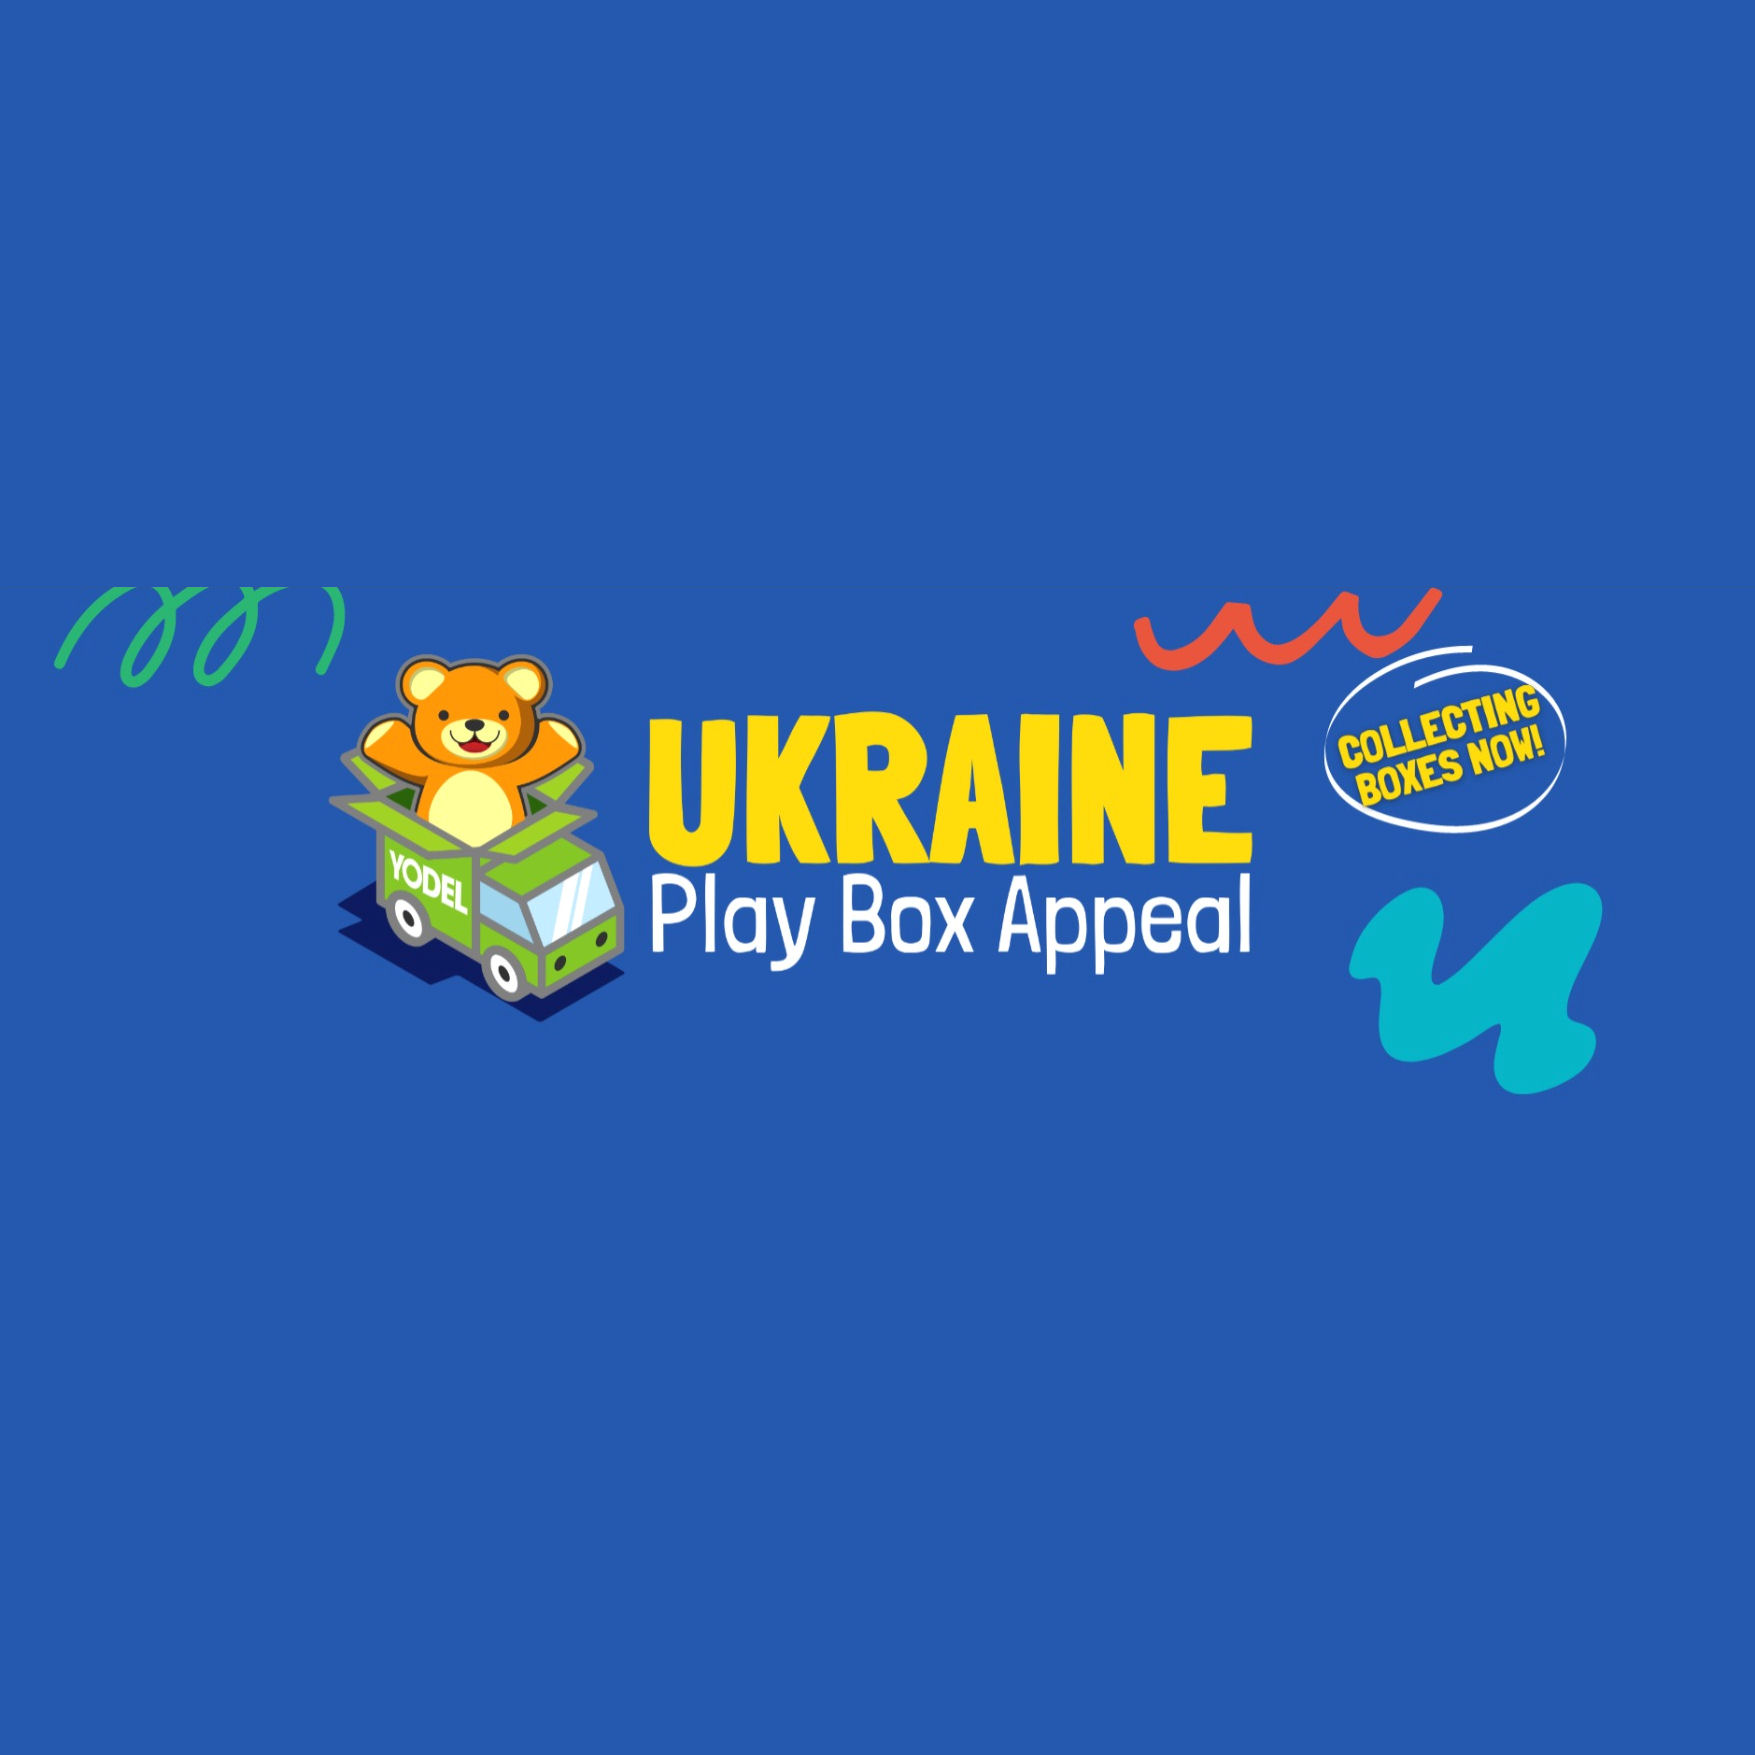 Ukraine Play Box Appeal